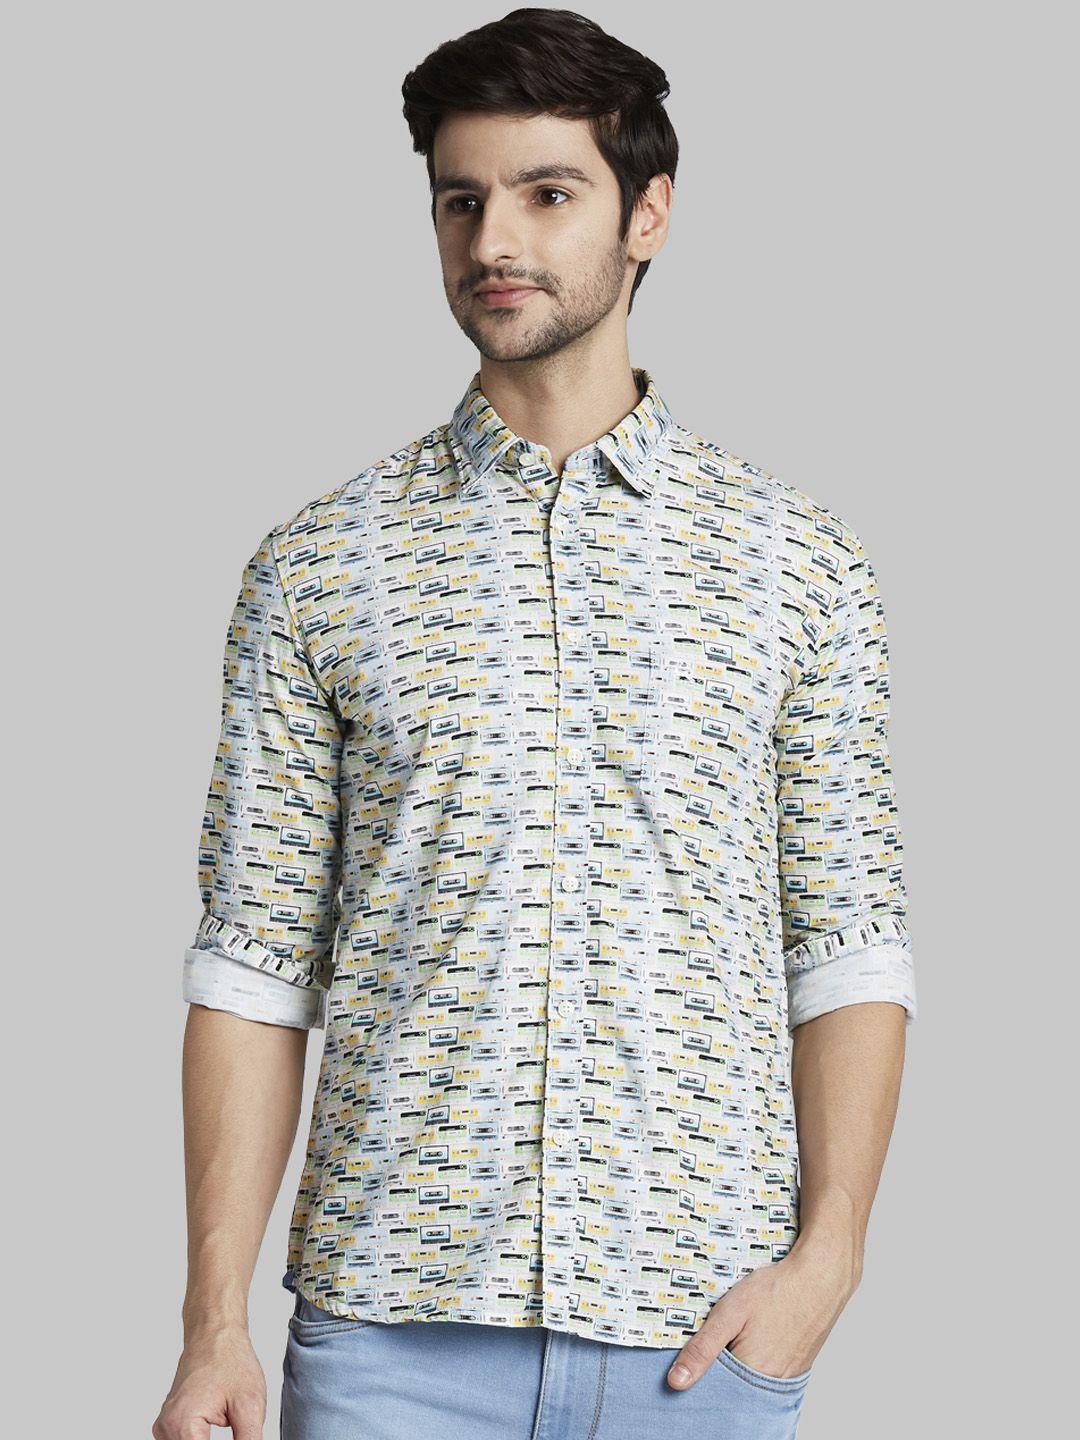 parx-men-off-white-&-blue-slim-fit-printed-casual-shirt